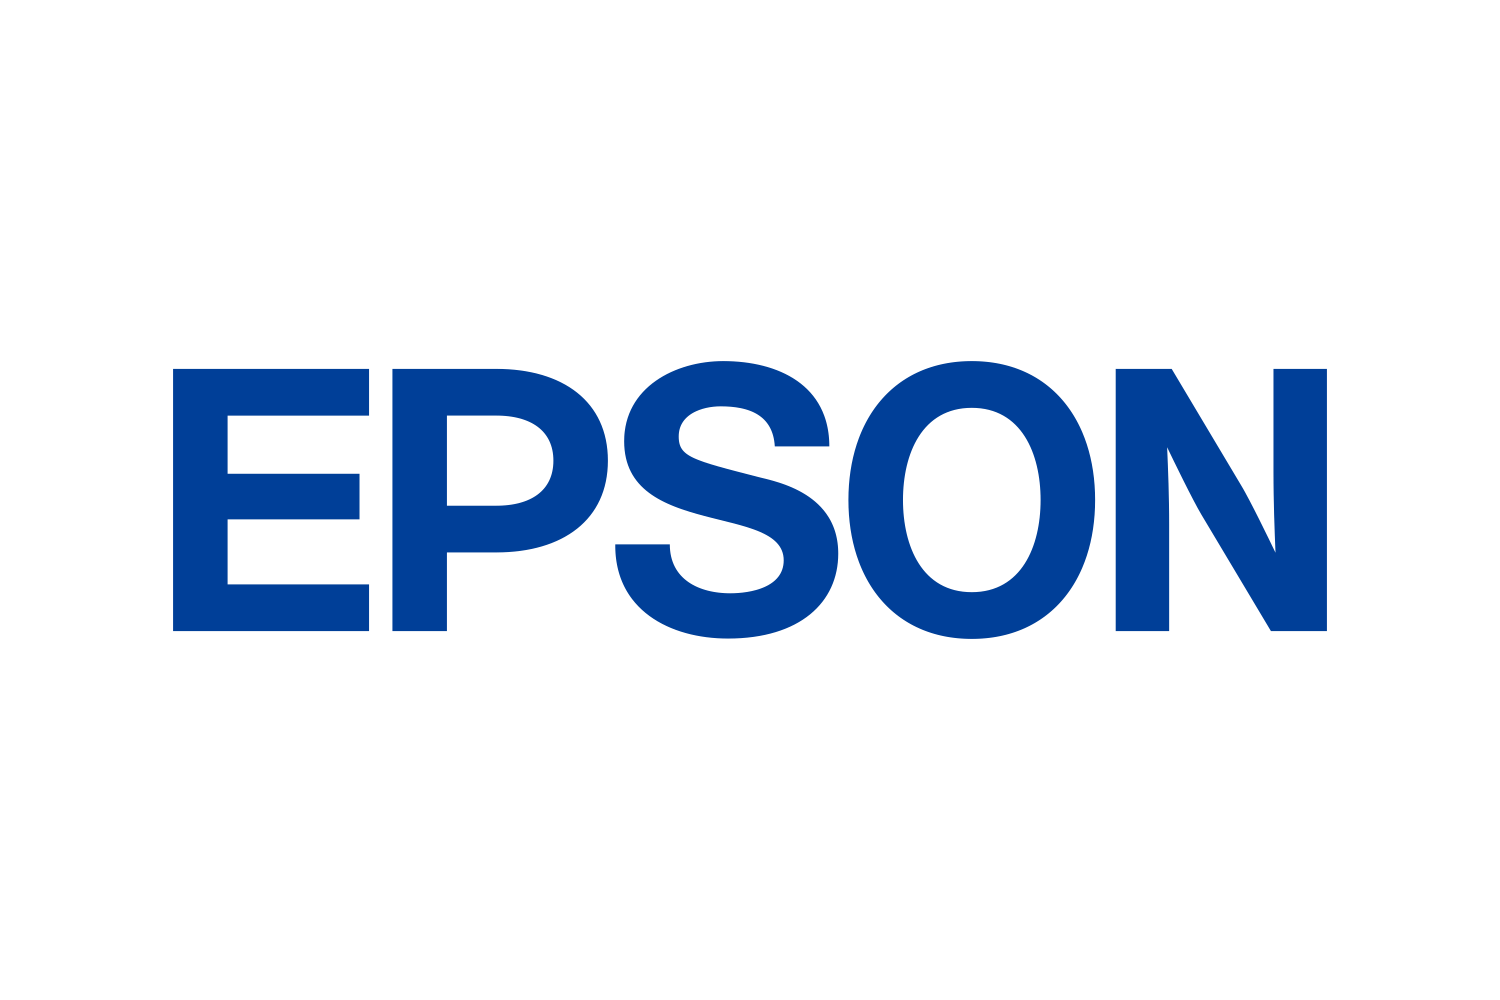 EPSON Epson.png